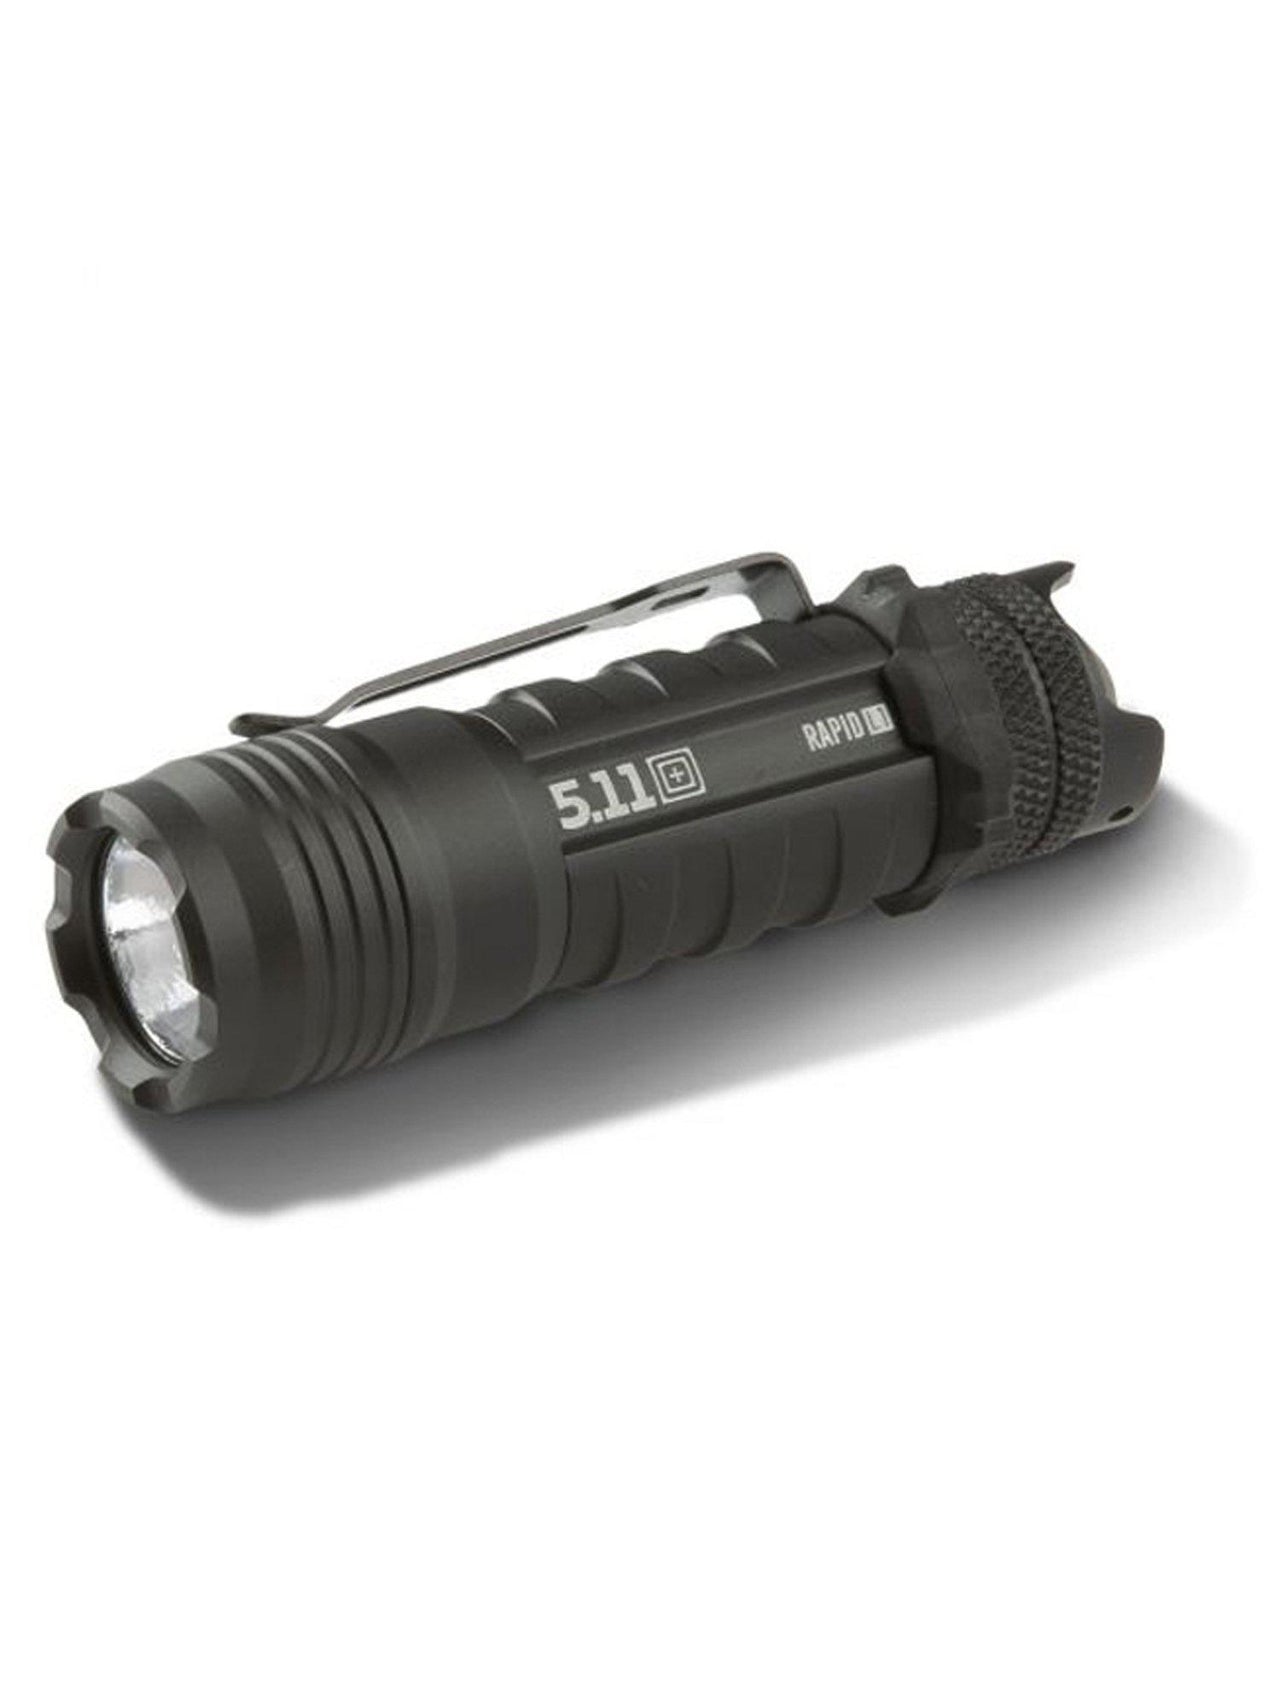 5.11 Tactical Rapid L1 Flashlight - TacSource